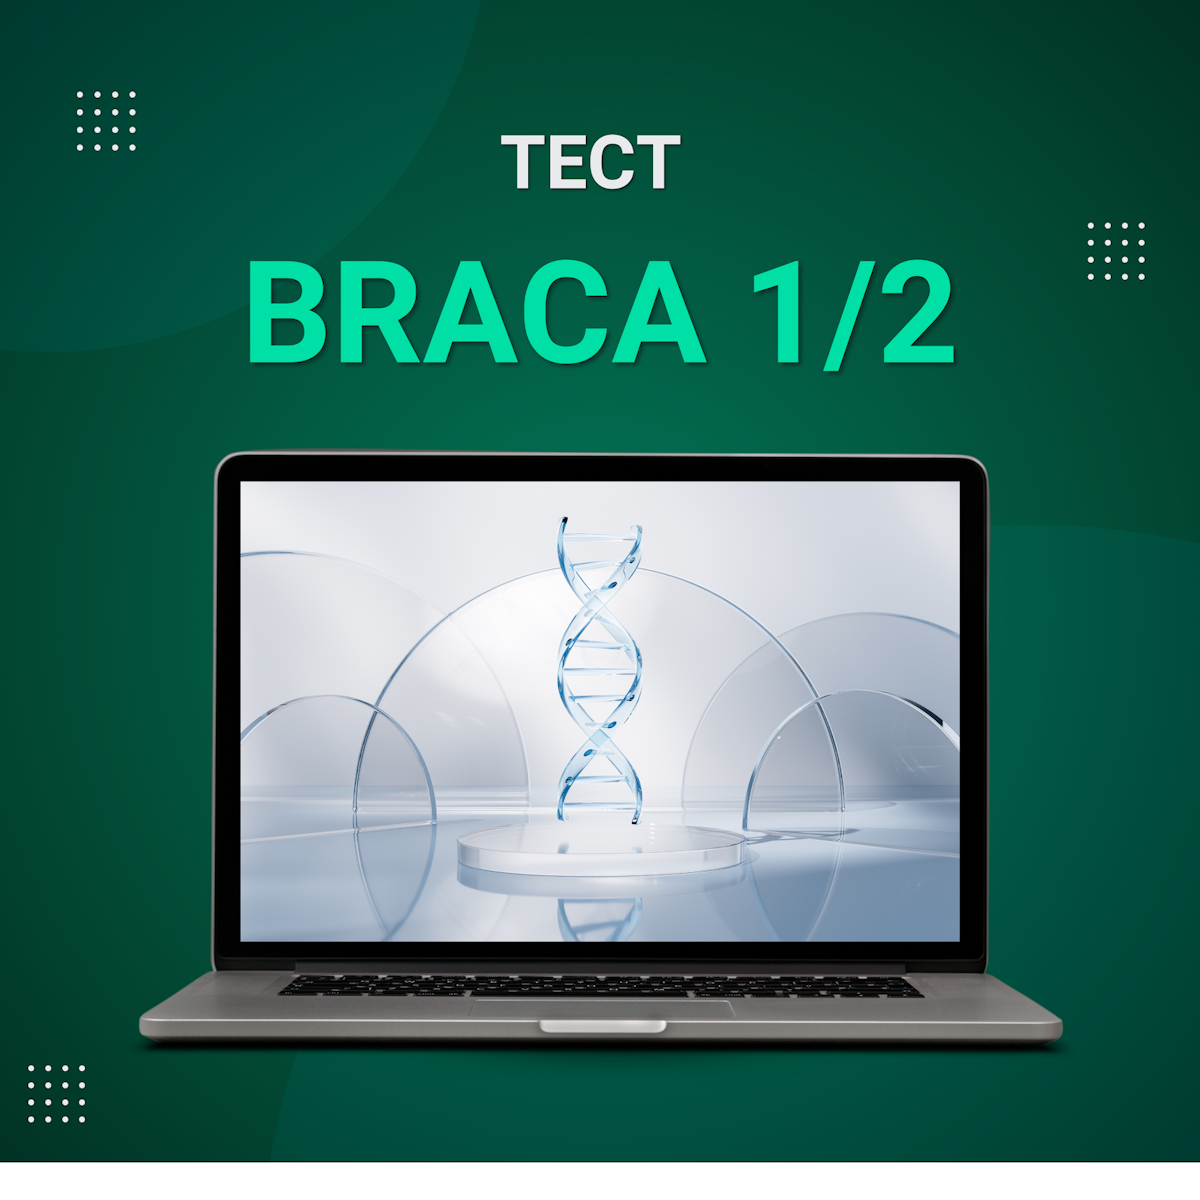 BRCA 1/2 TEST